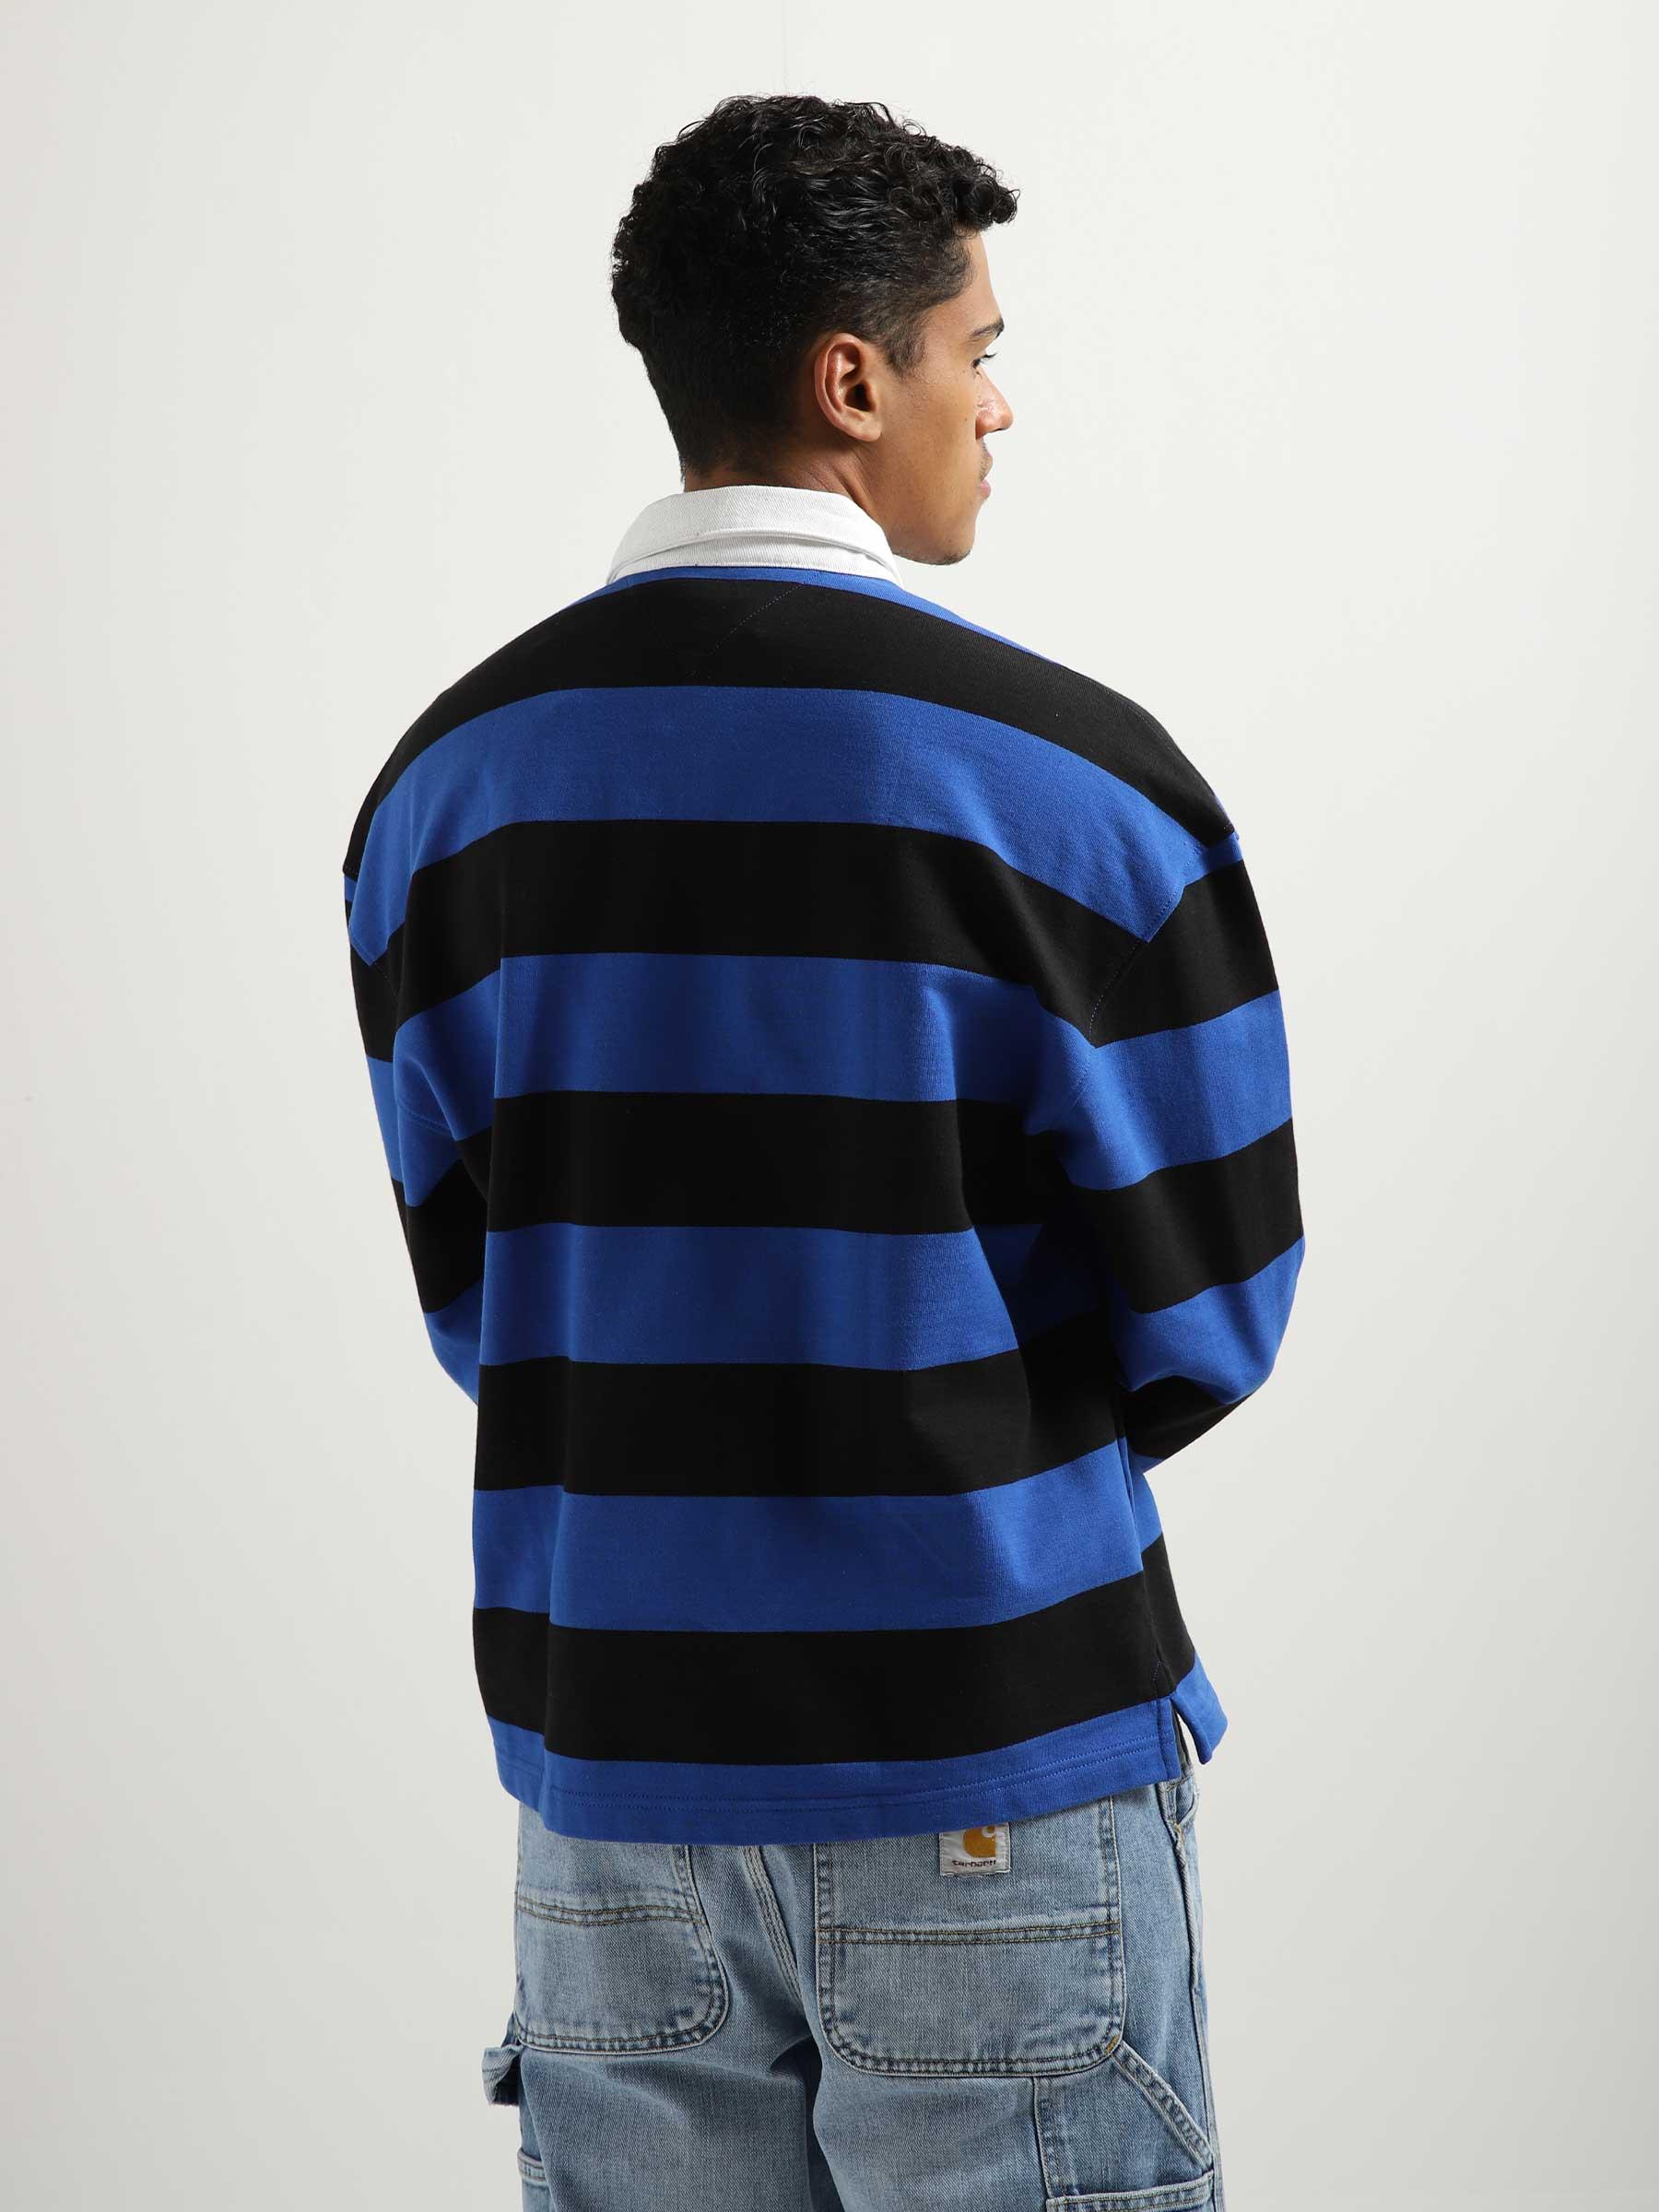 Linear Freshcotton Jeans Tommy - TJM Serif Black Rugby Stripe Stripe